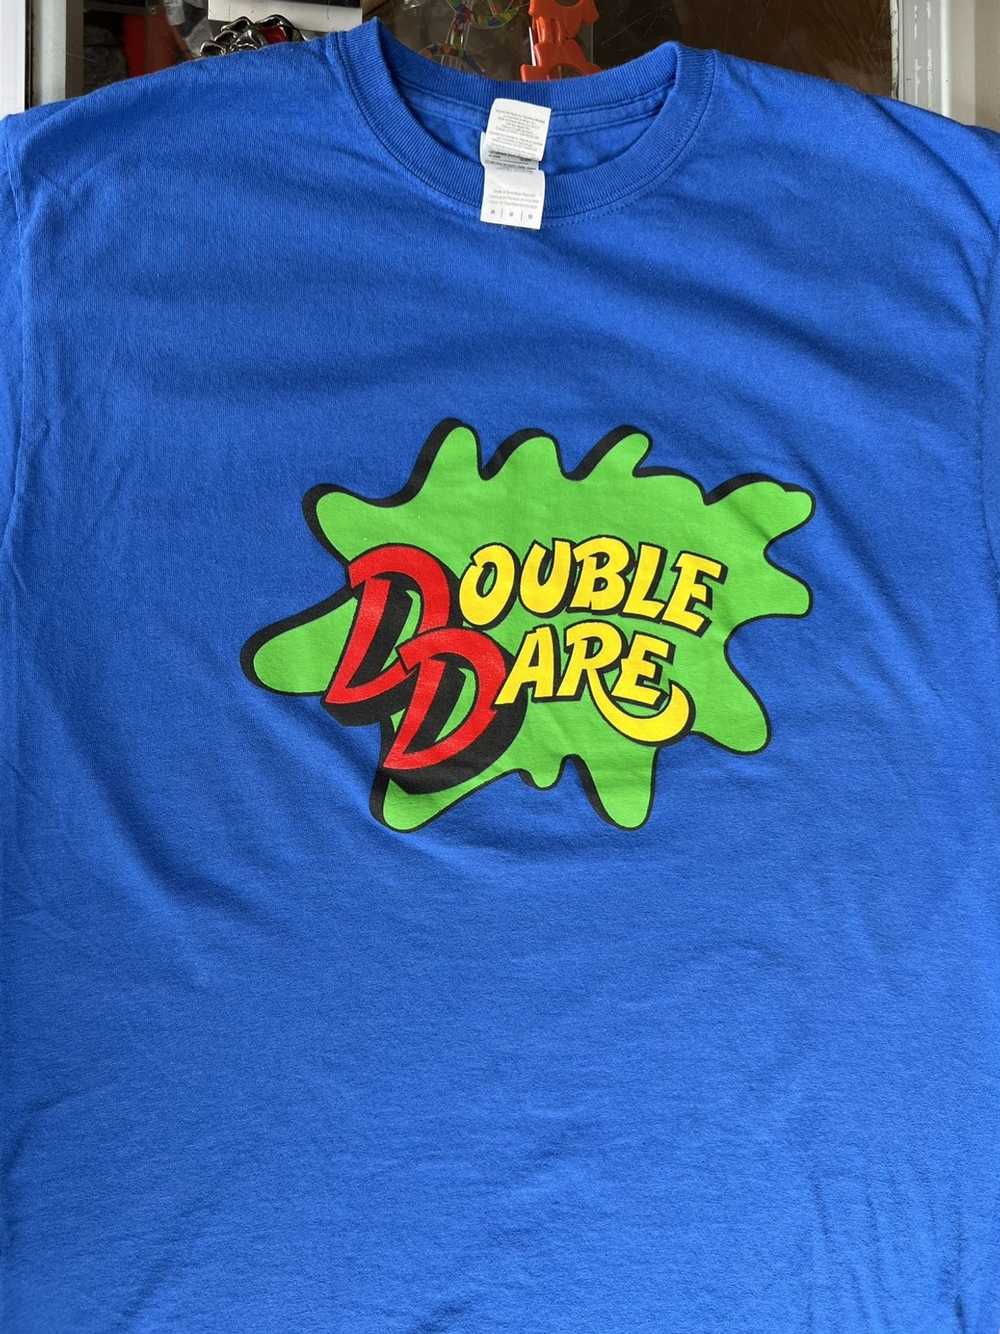 Nickelodeon × Vintage Double Dare Shirt - image 2